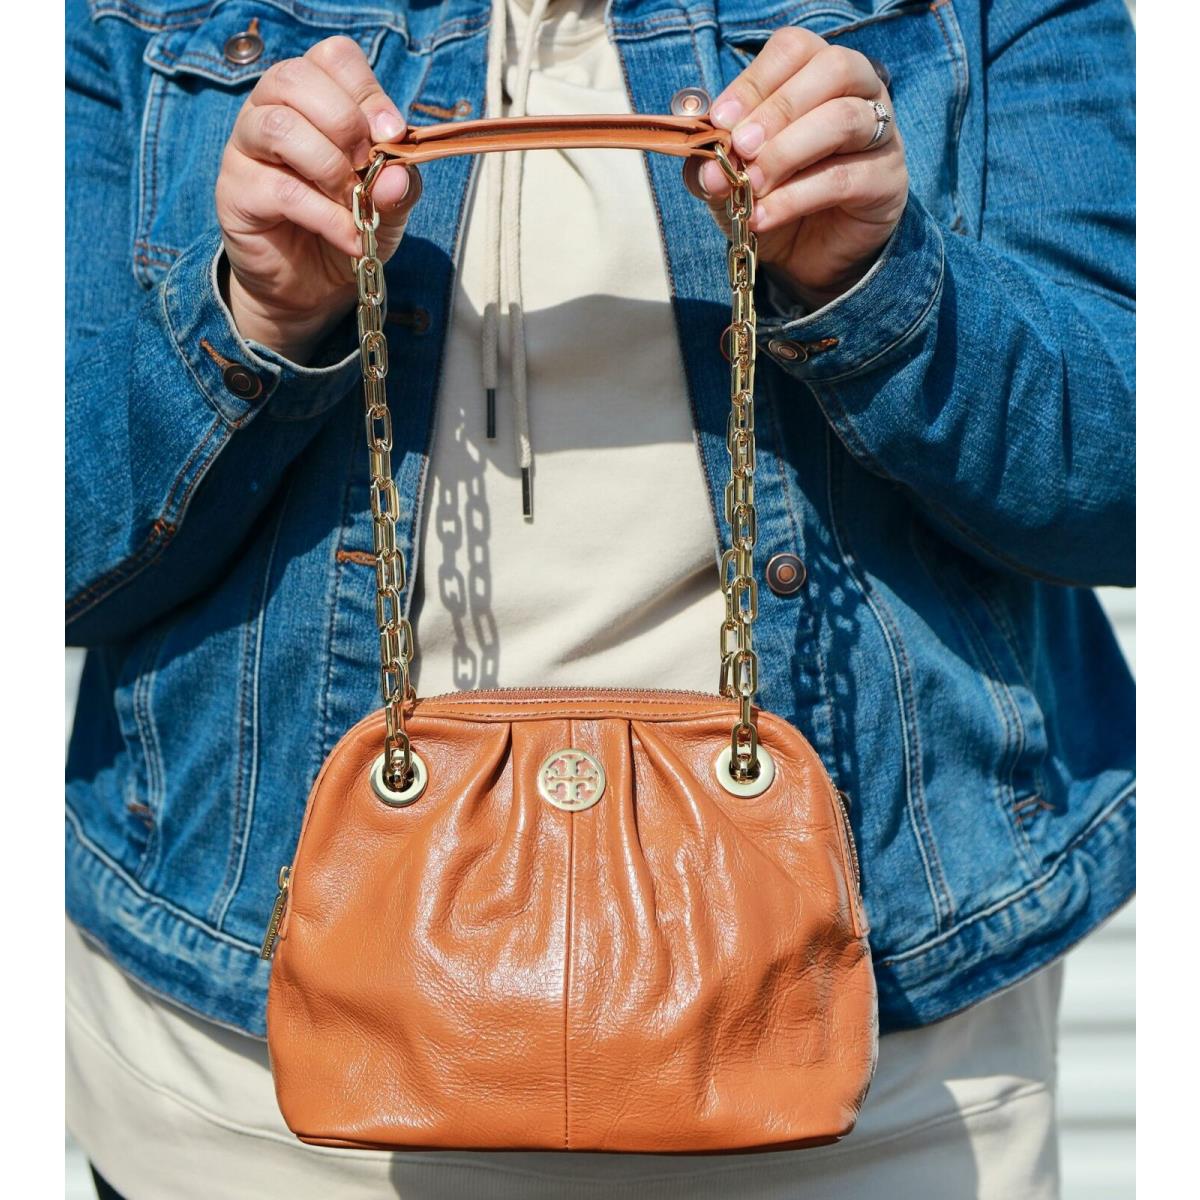 Tory Burch Crinkle Leather 2 Way Crossbody Bag w Chain in Royal Tan - Tory  Burch bag - 887712843671 | Fash Brands